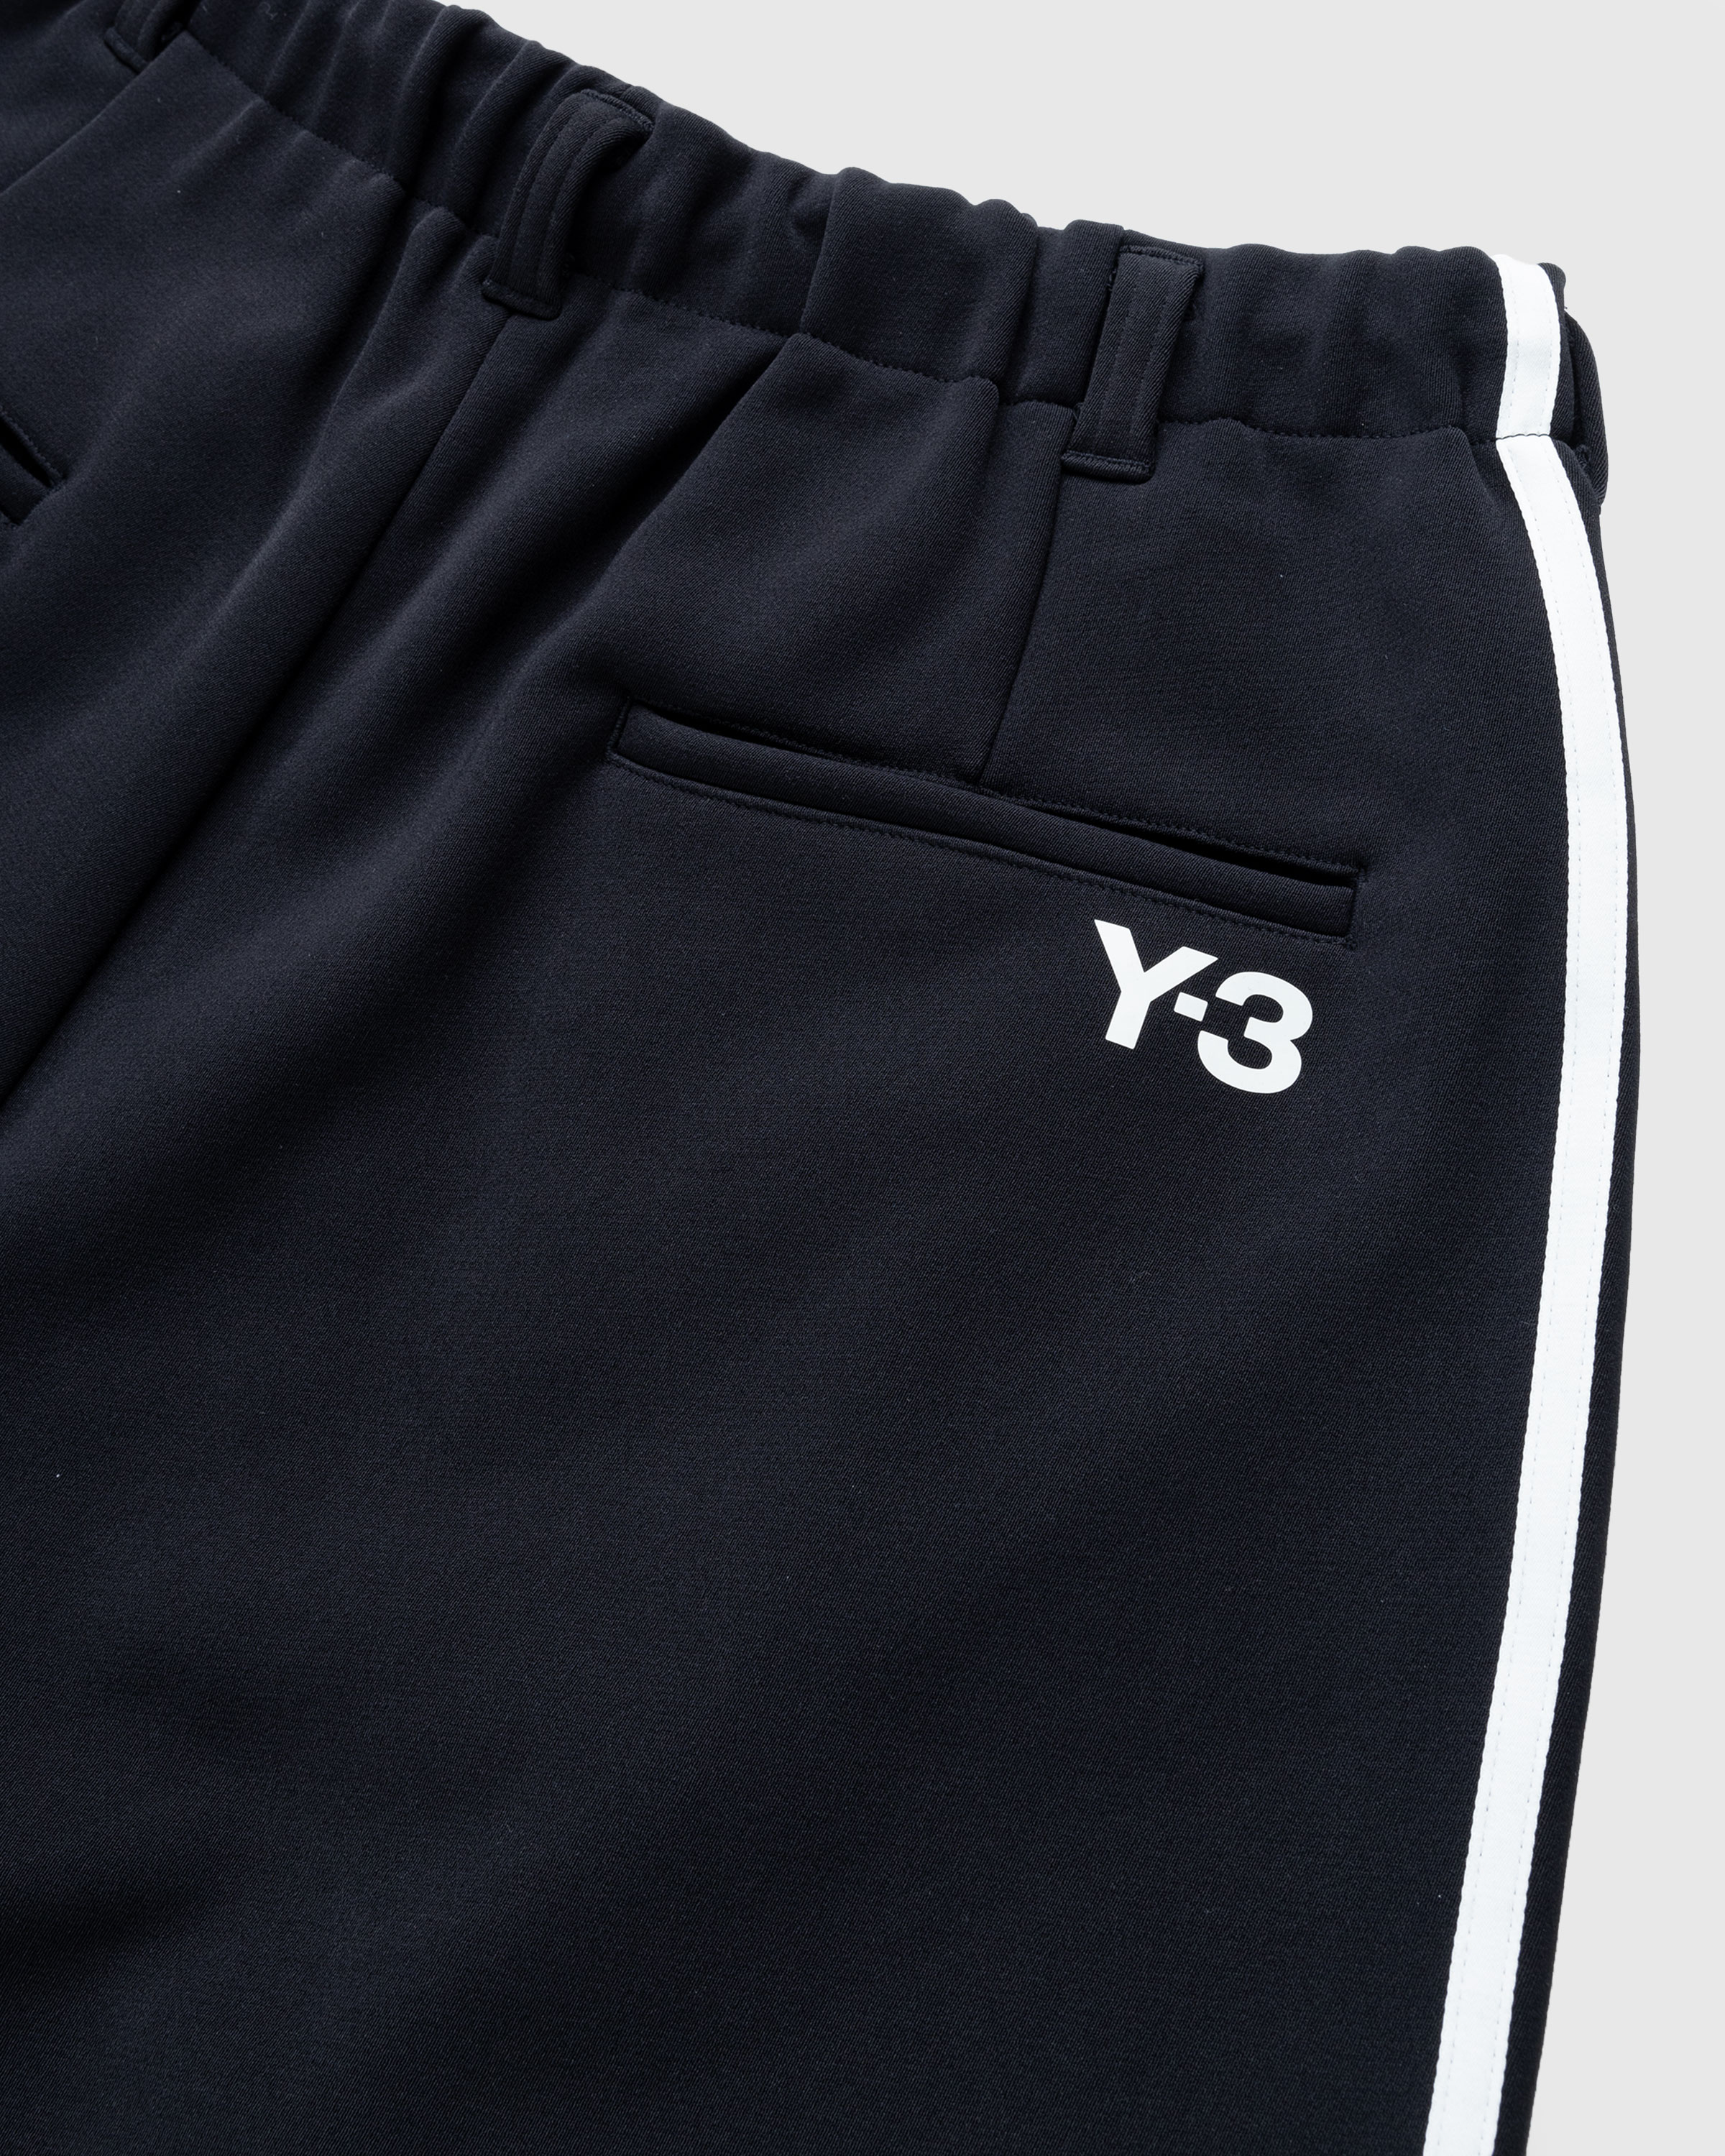 Y-3 – 3 Stripes Track Pants Black/White - Pants - Black - Image 7